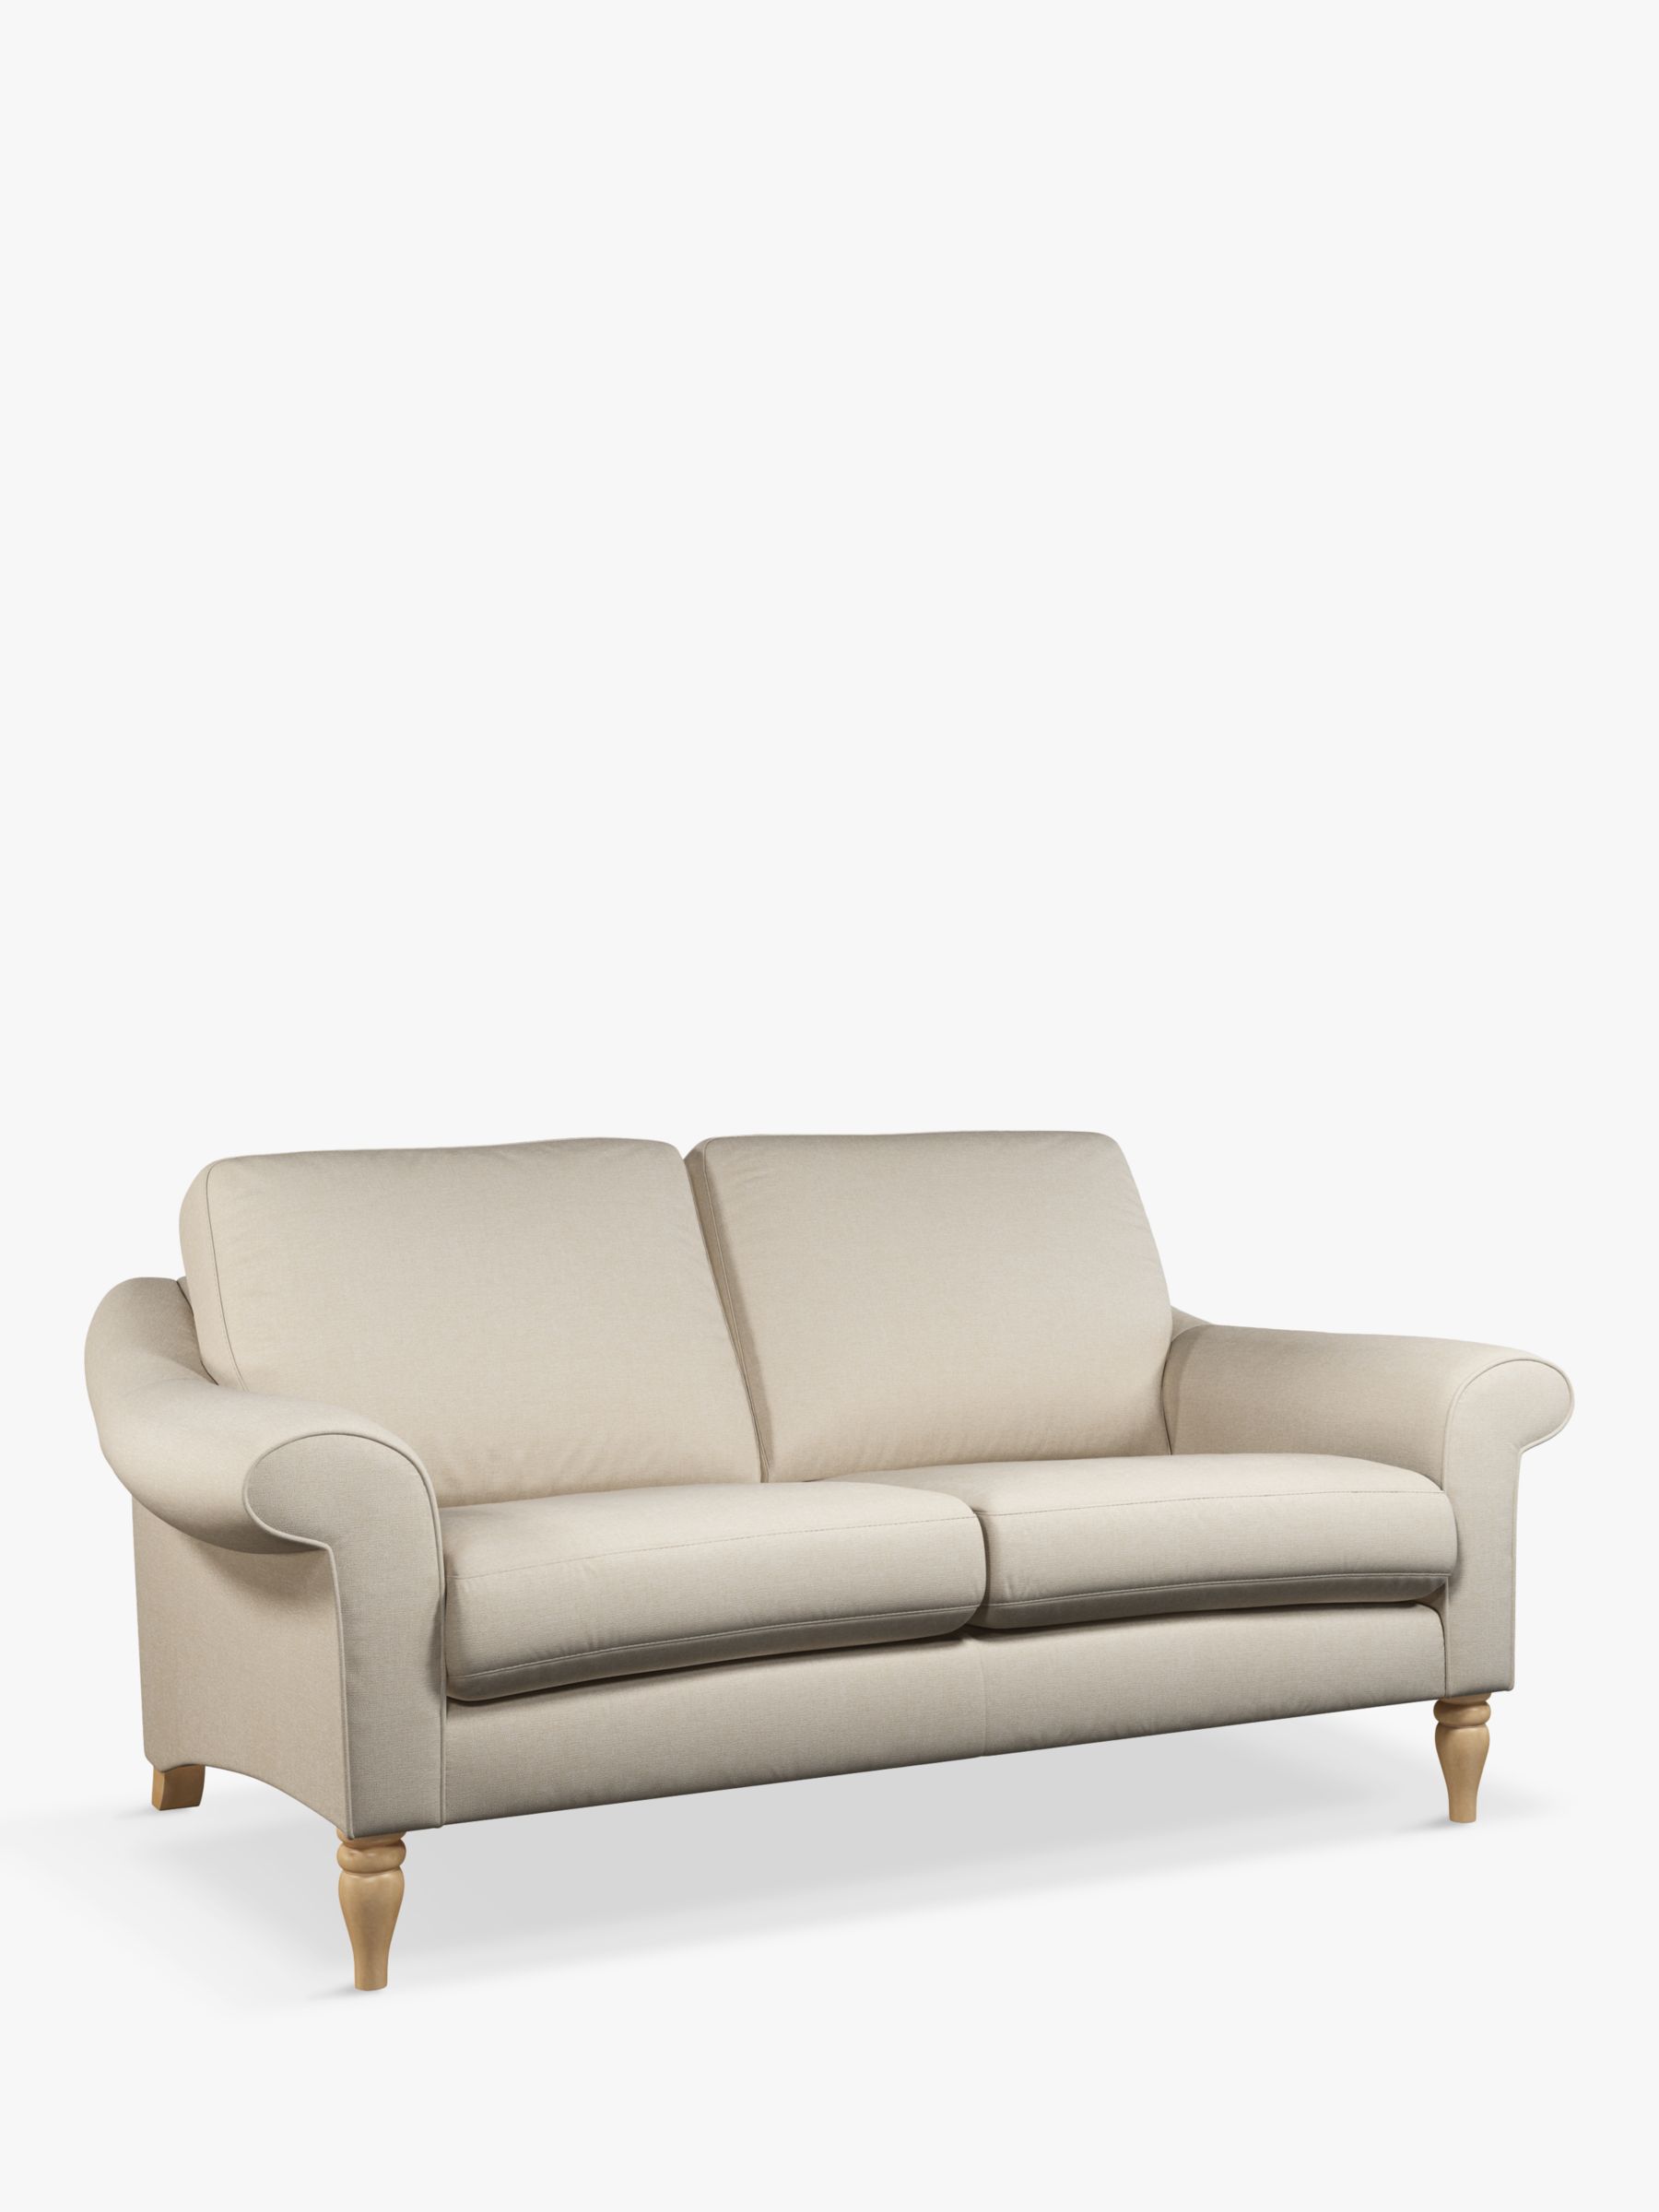 Camber Range, John Lewis Camber Medium 2 Seater Sofa, Light Leg, Matilda Natural